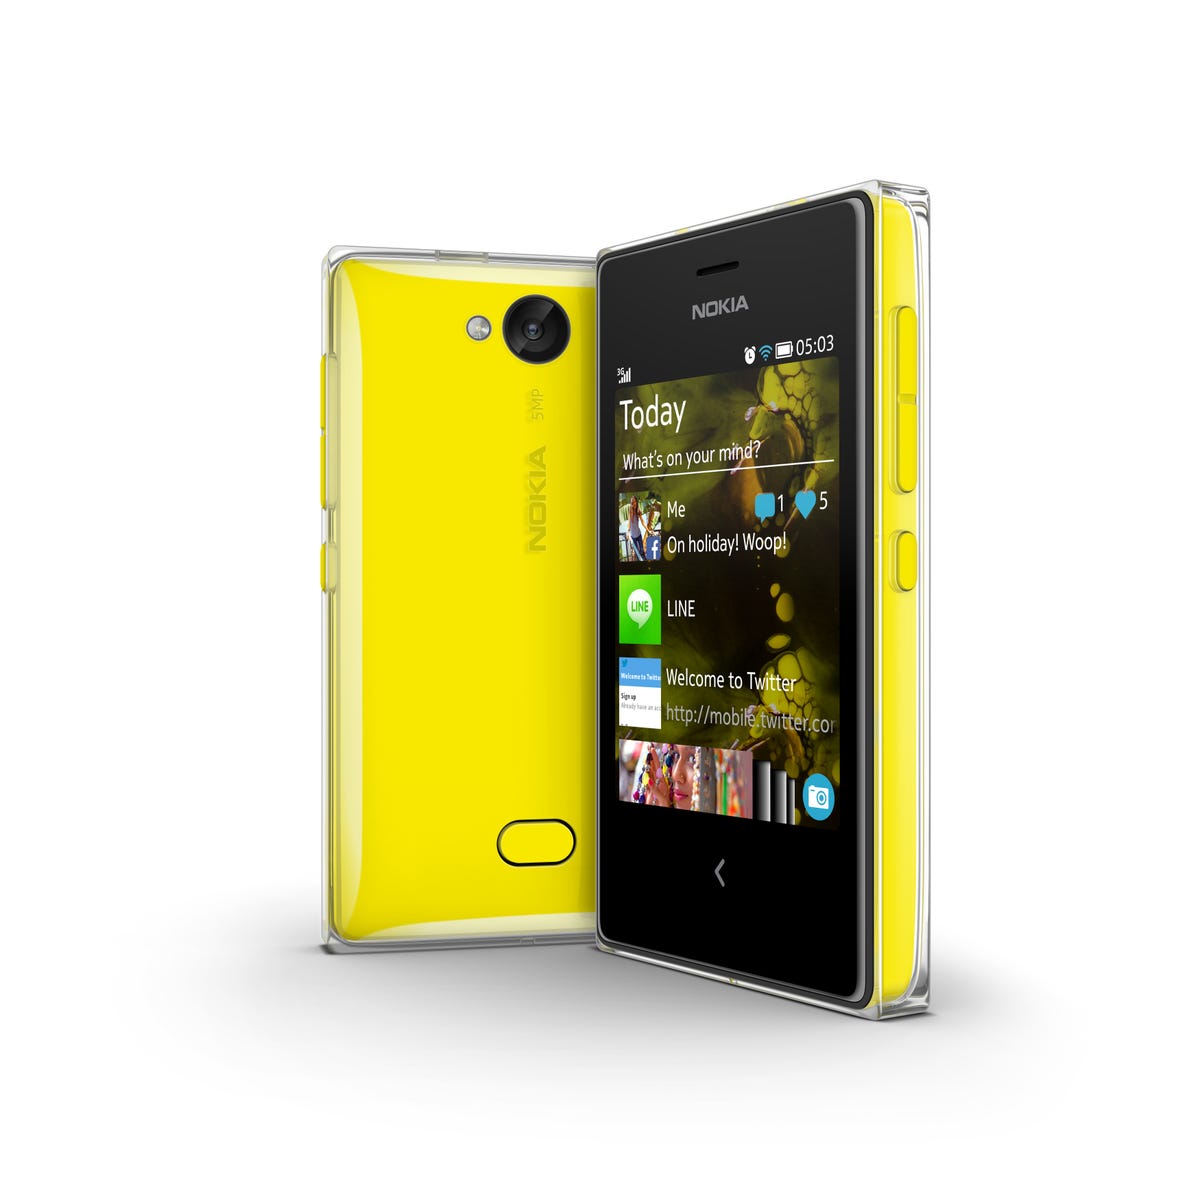 Nokia_Asha_503_Yellow.jpg